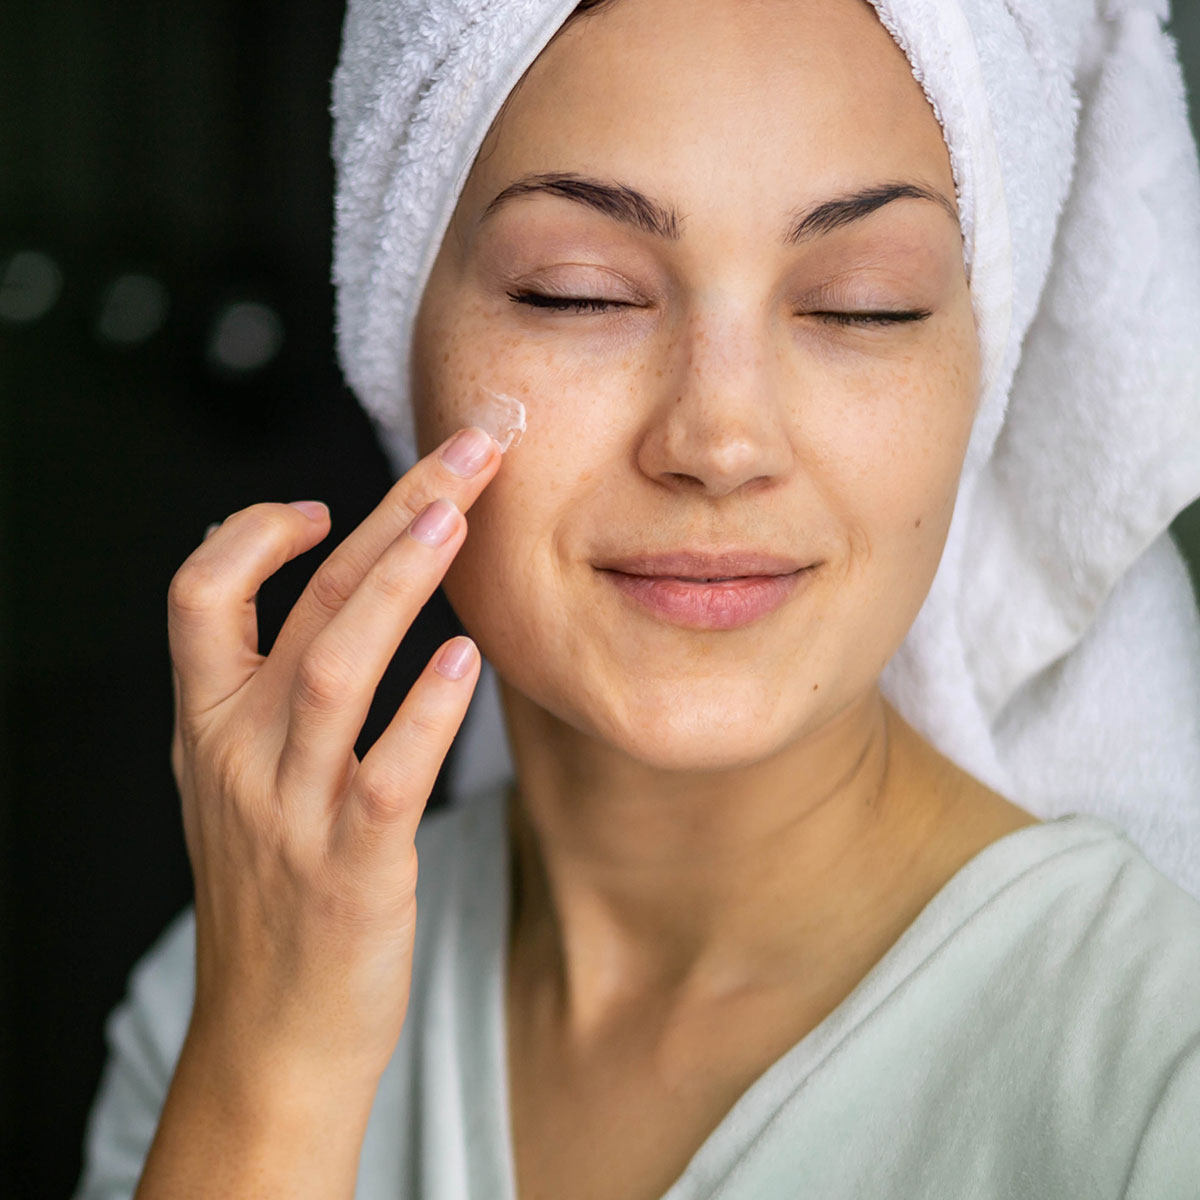 woman touching face applying sunscreen towel hair up